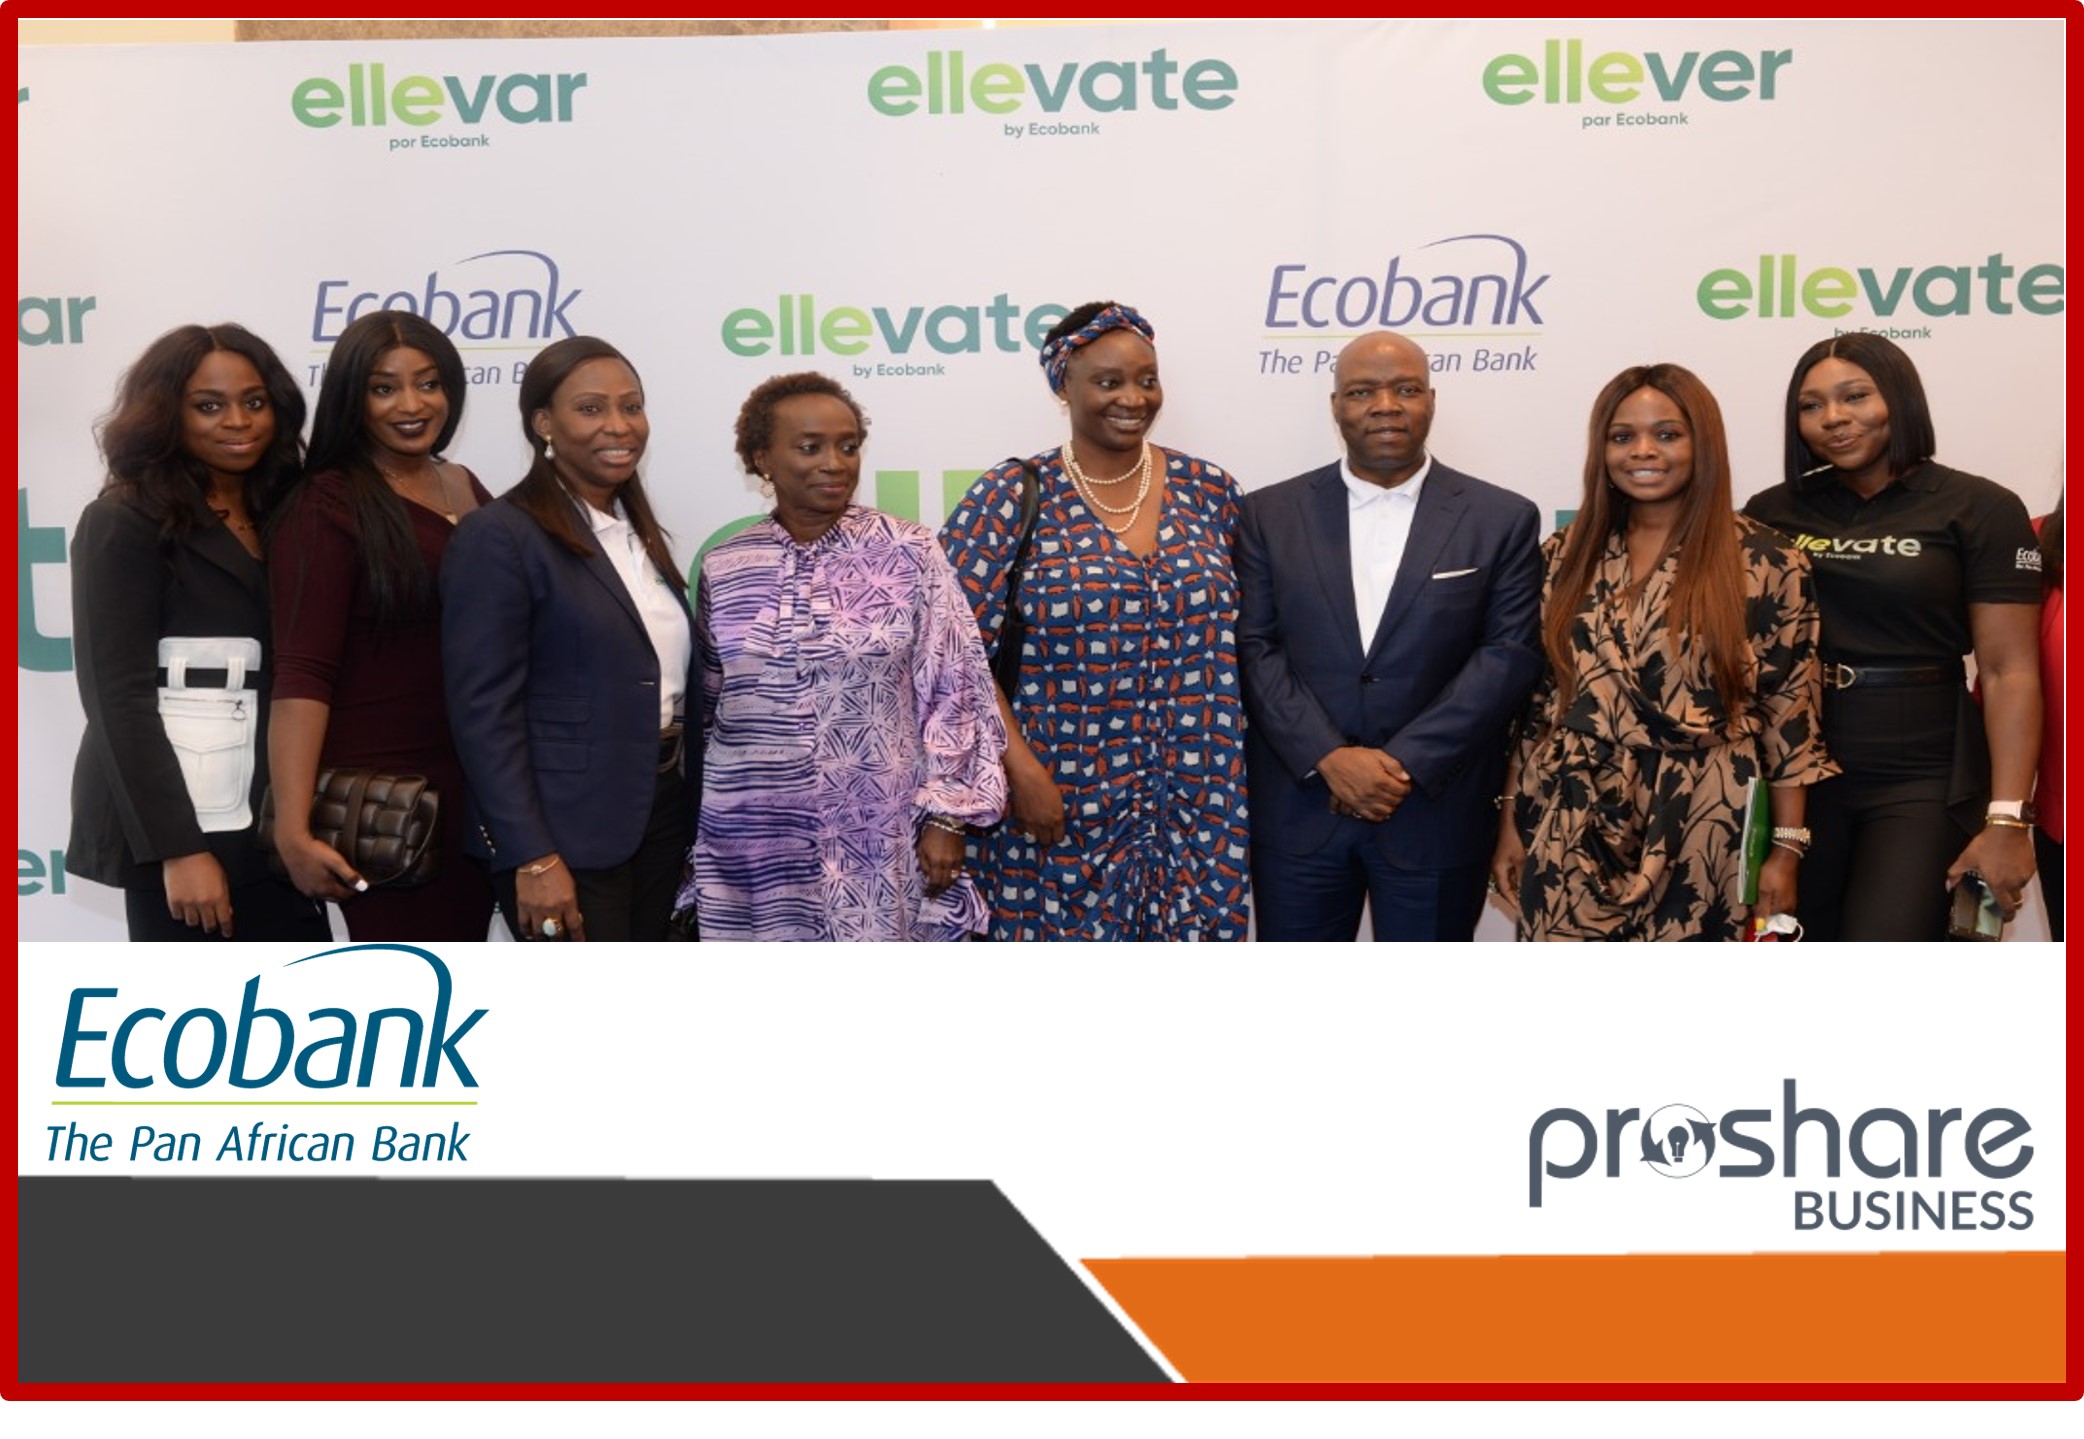 Ecobank to "Ellevate" Nigerian Women In Business